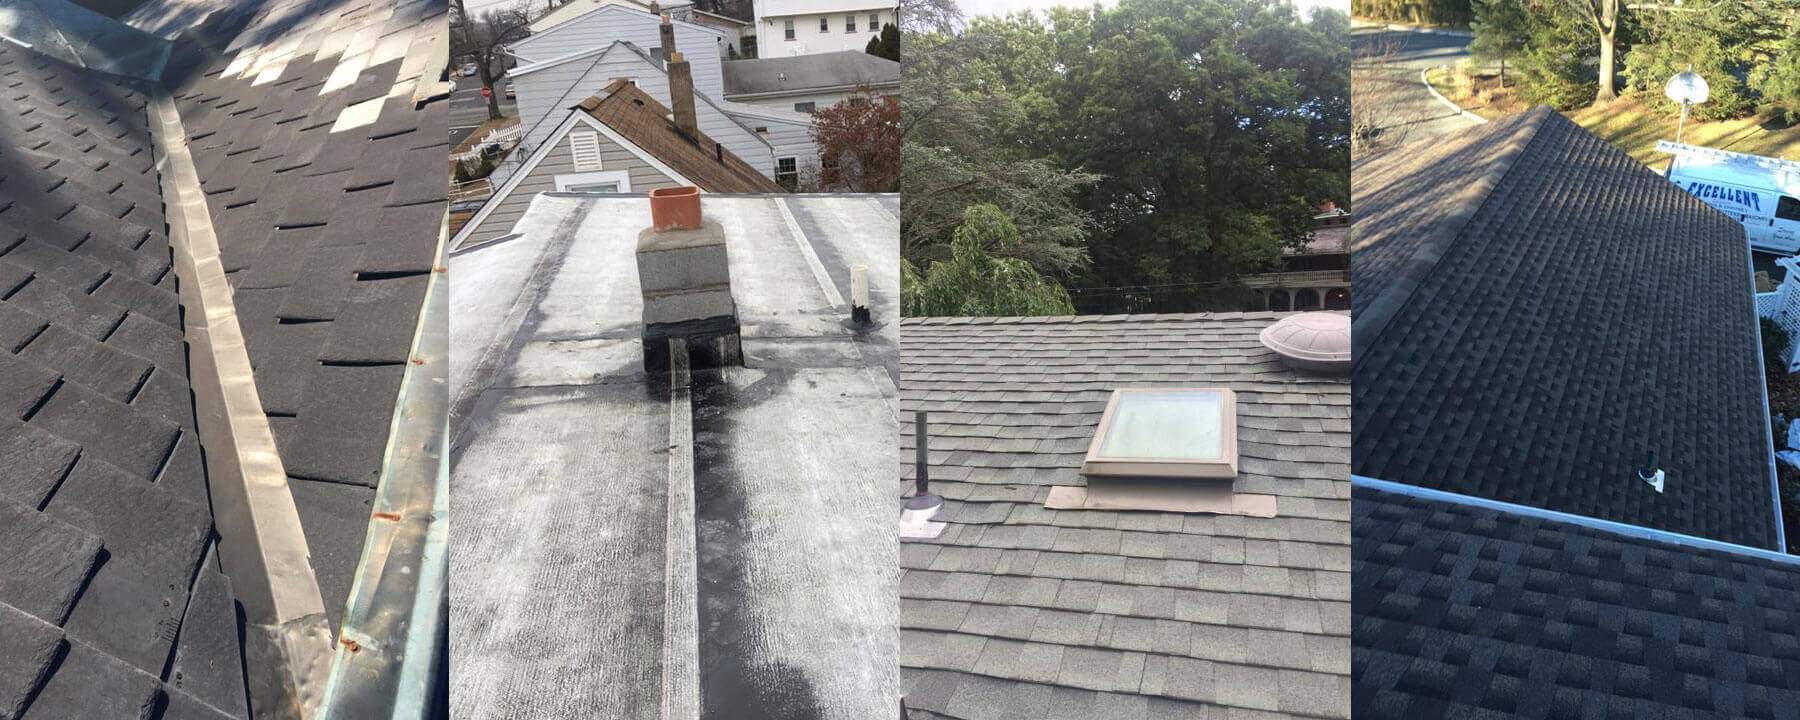 Roof Repair Service Fair Lawn NJ